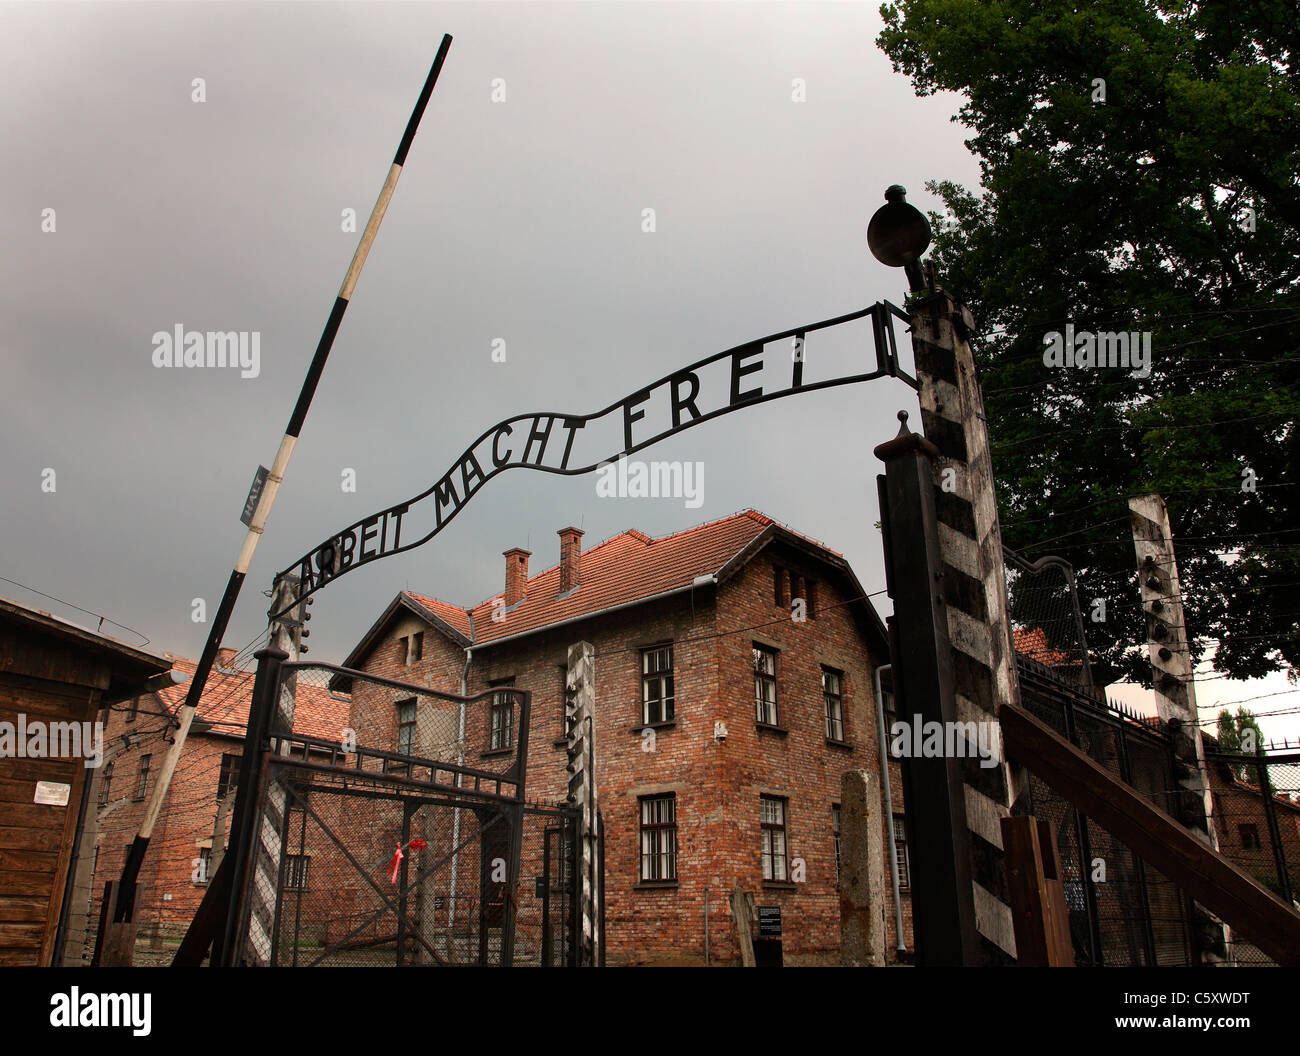 1 Entrada de Auschwitz - con el infame cartel "Arbeit macht frei" Foto de stock